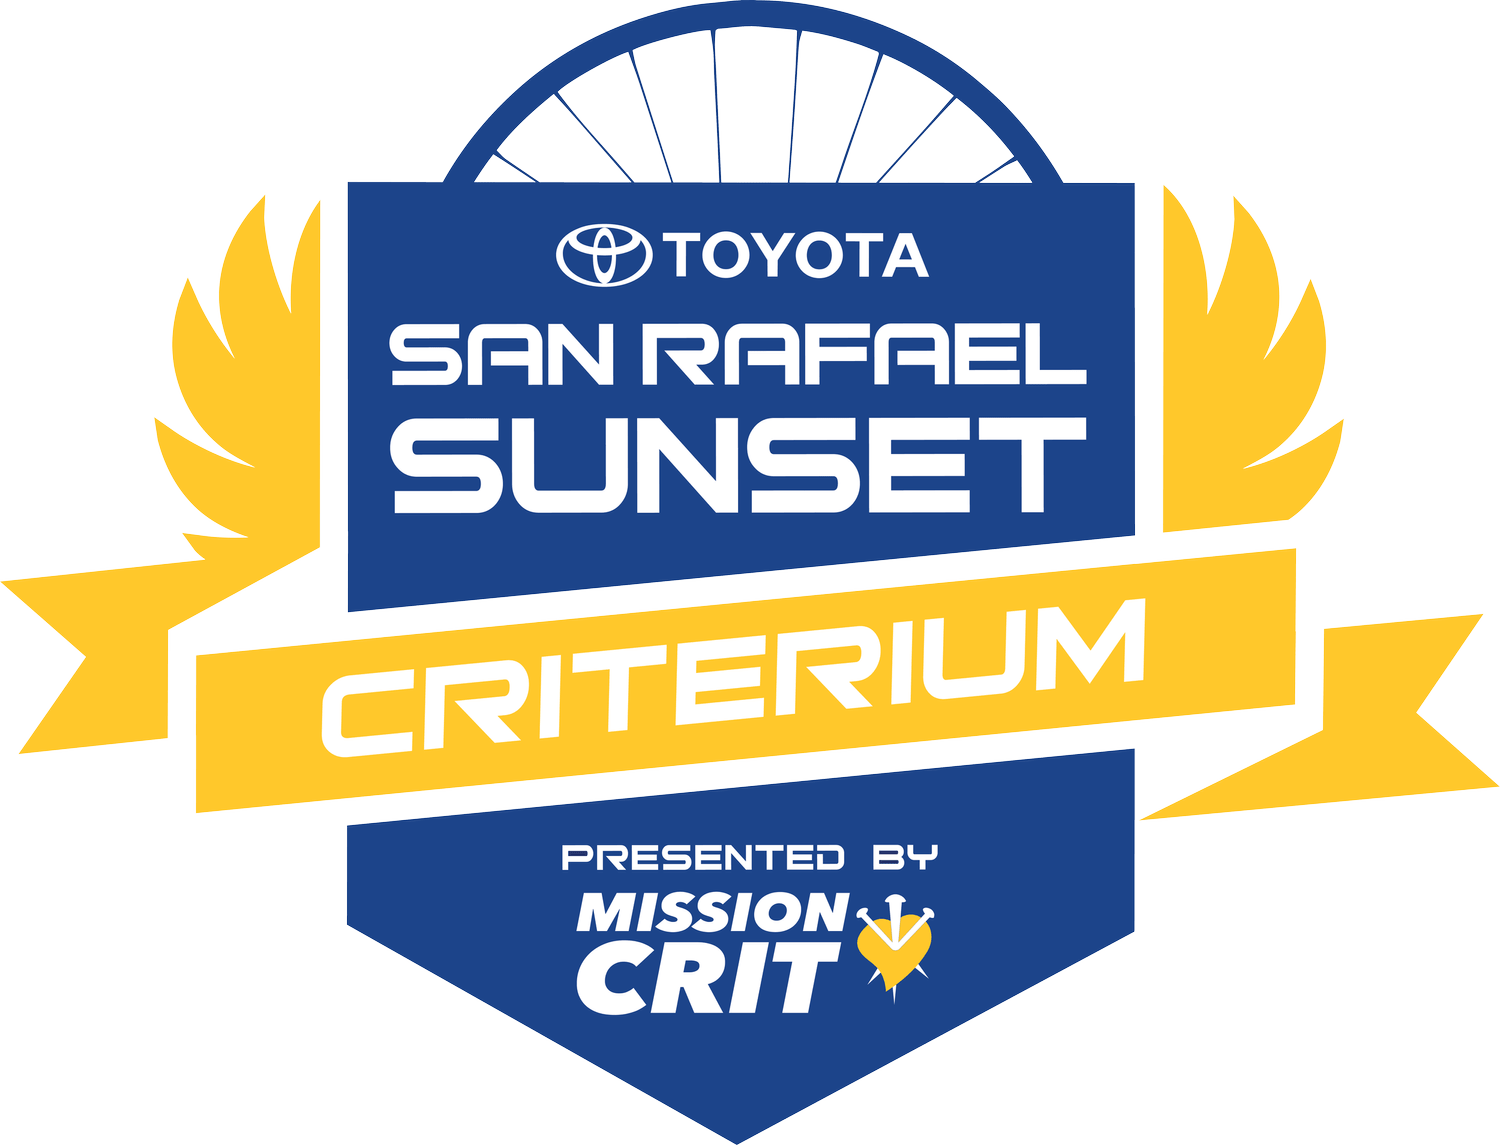 Toyota San Rafael Sunset Crit